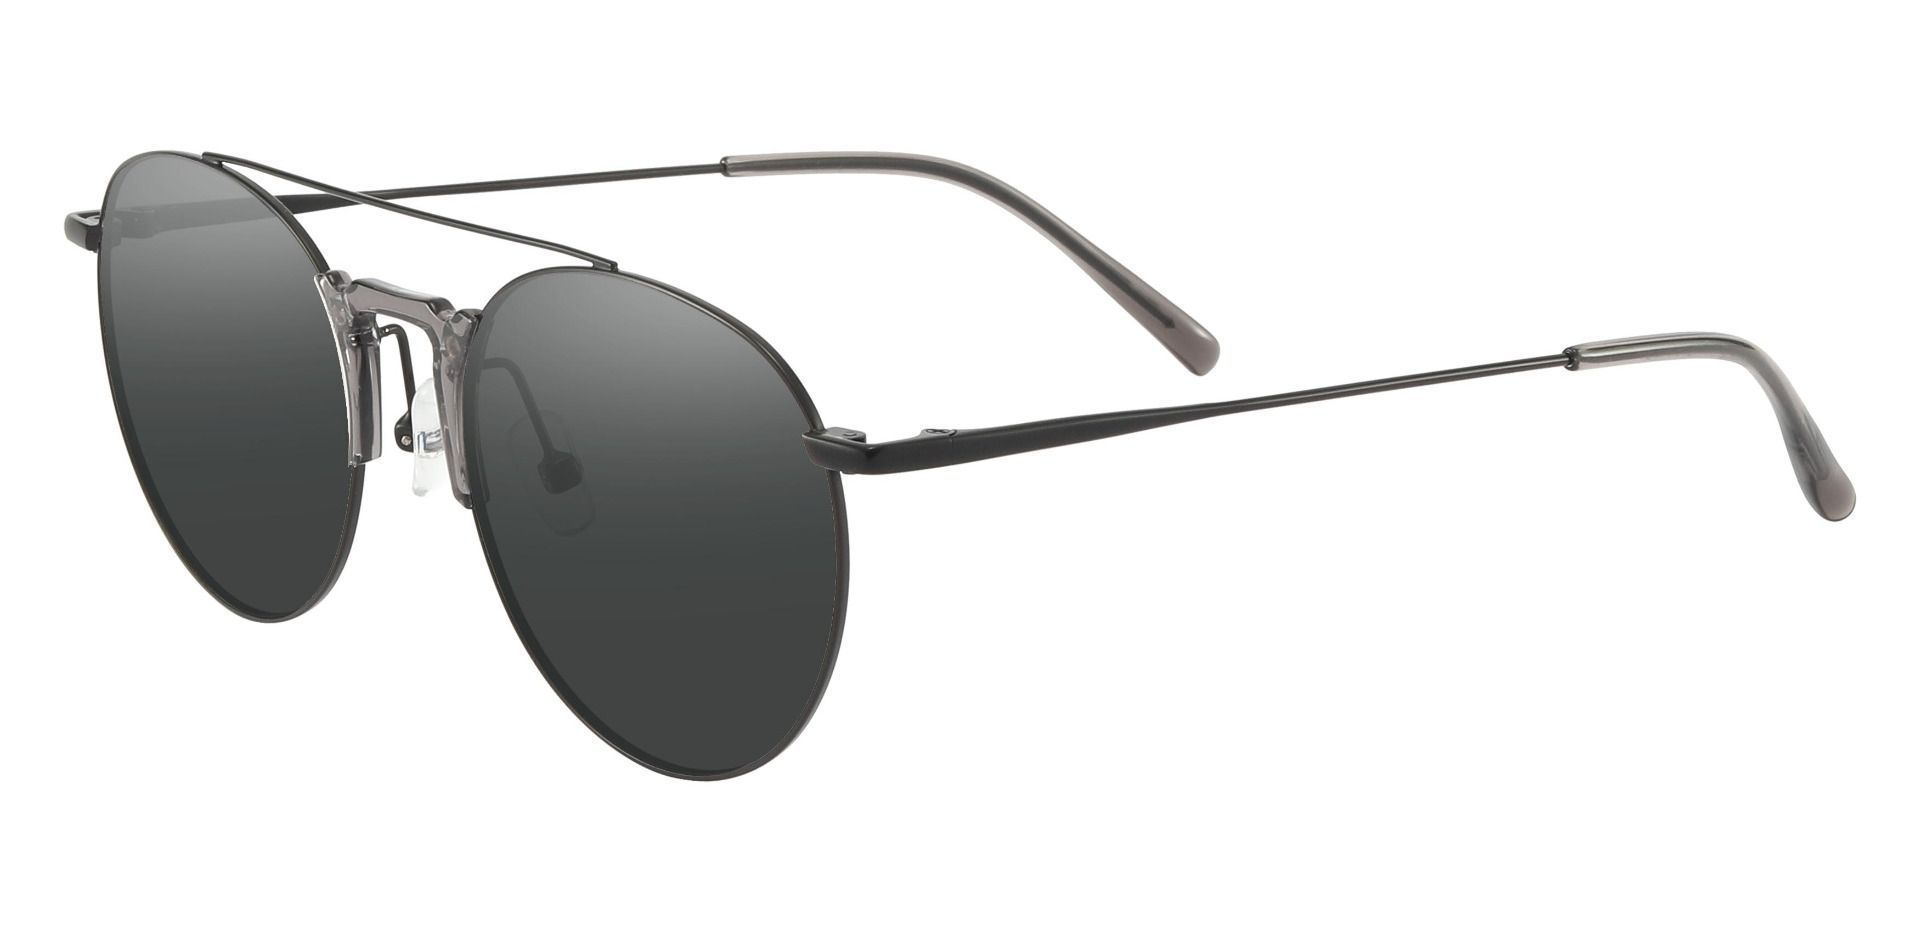 Ludden Aviator Non-Rx Sunglasses - Black Frame With Gray Lenses